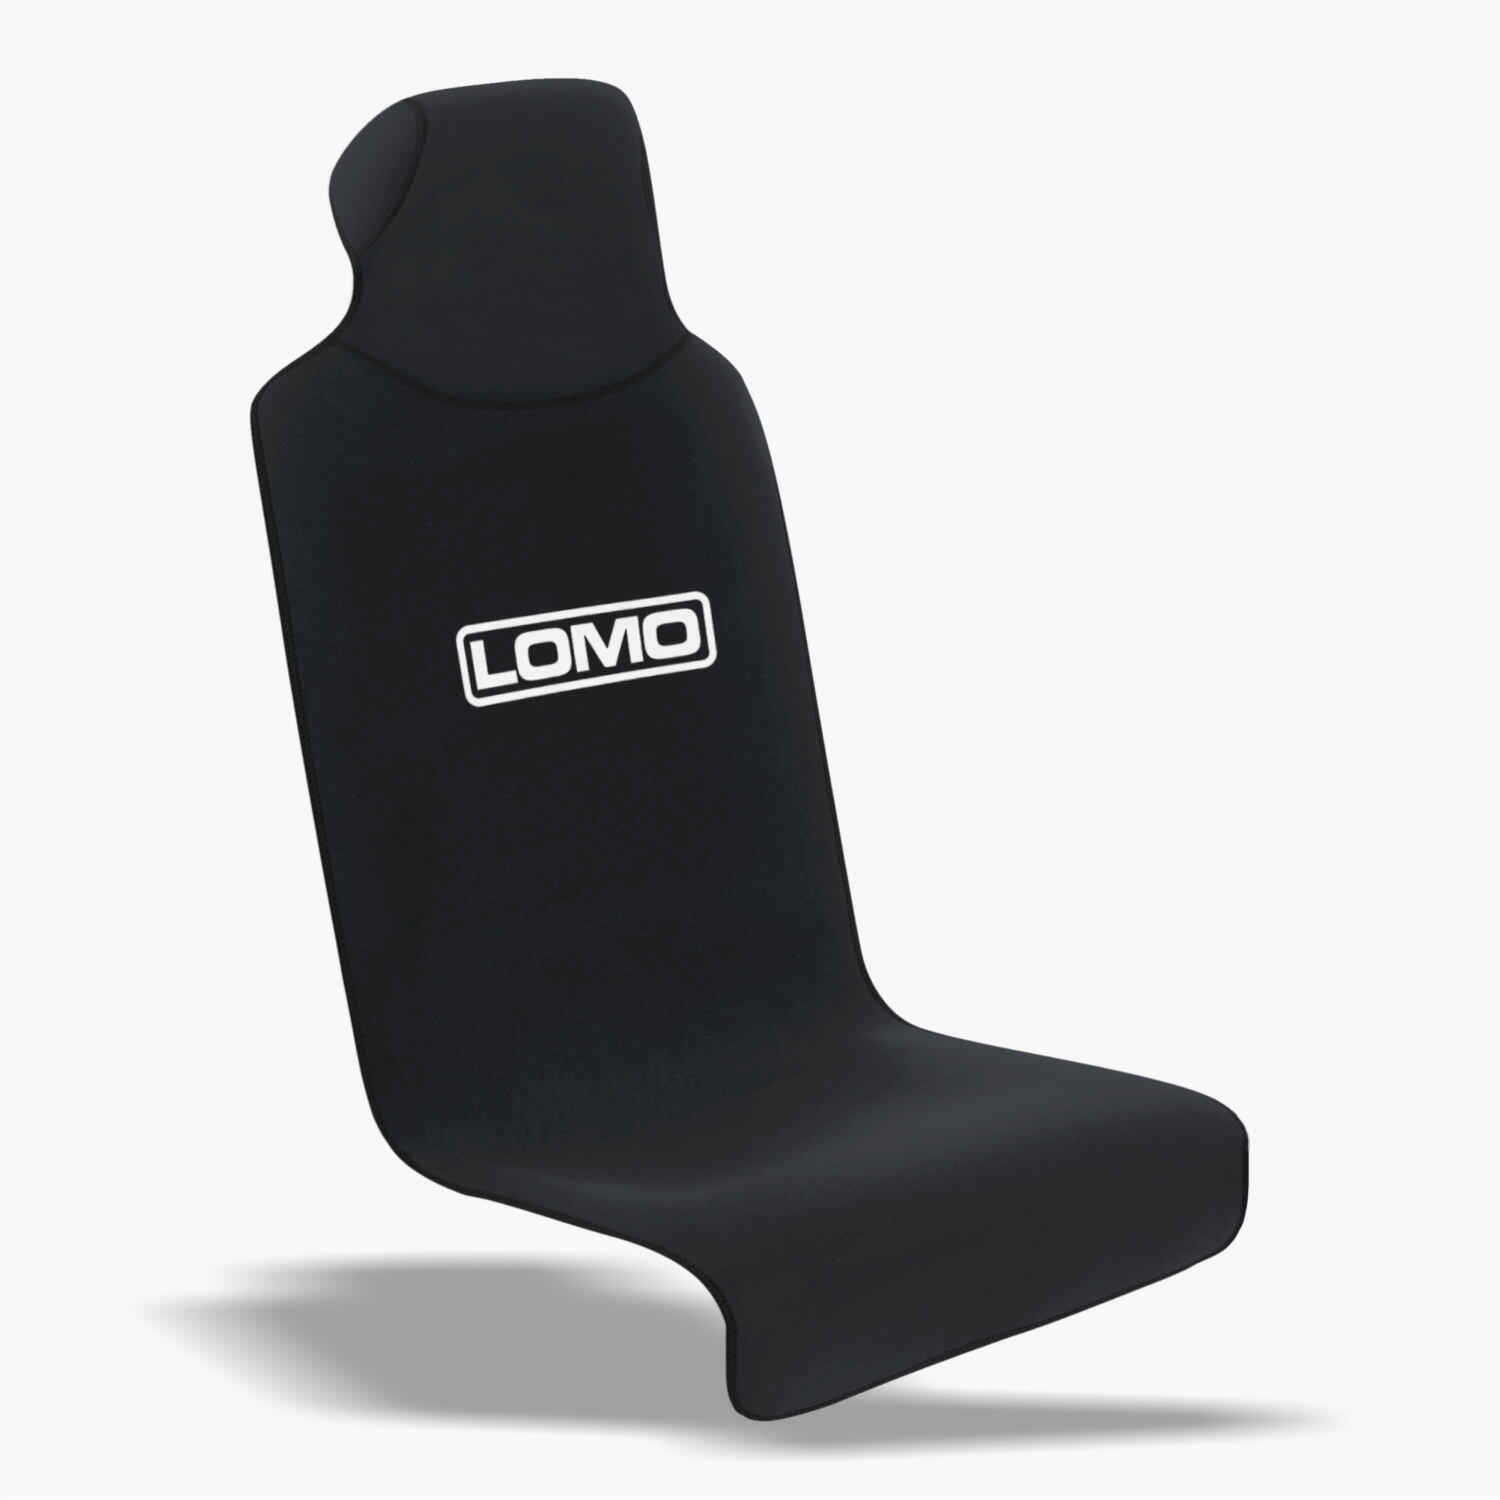 LOMO Lomo Neoprene Car Seat Cover - Waterproof